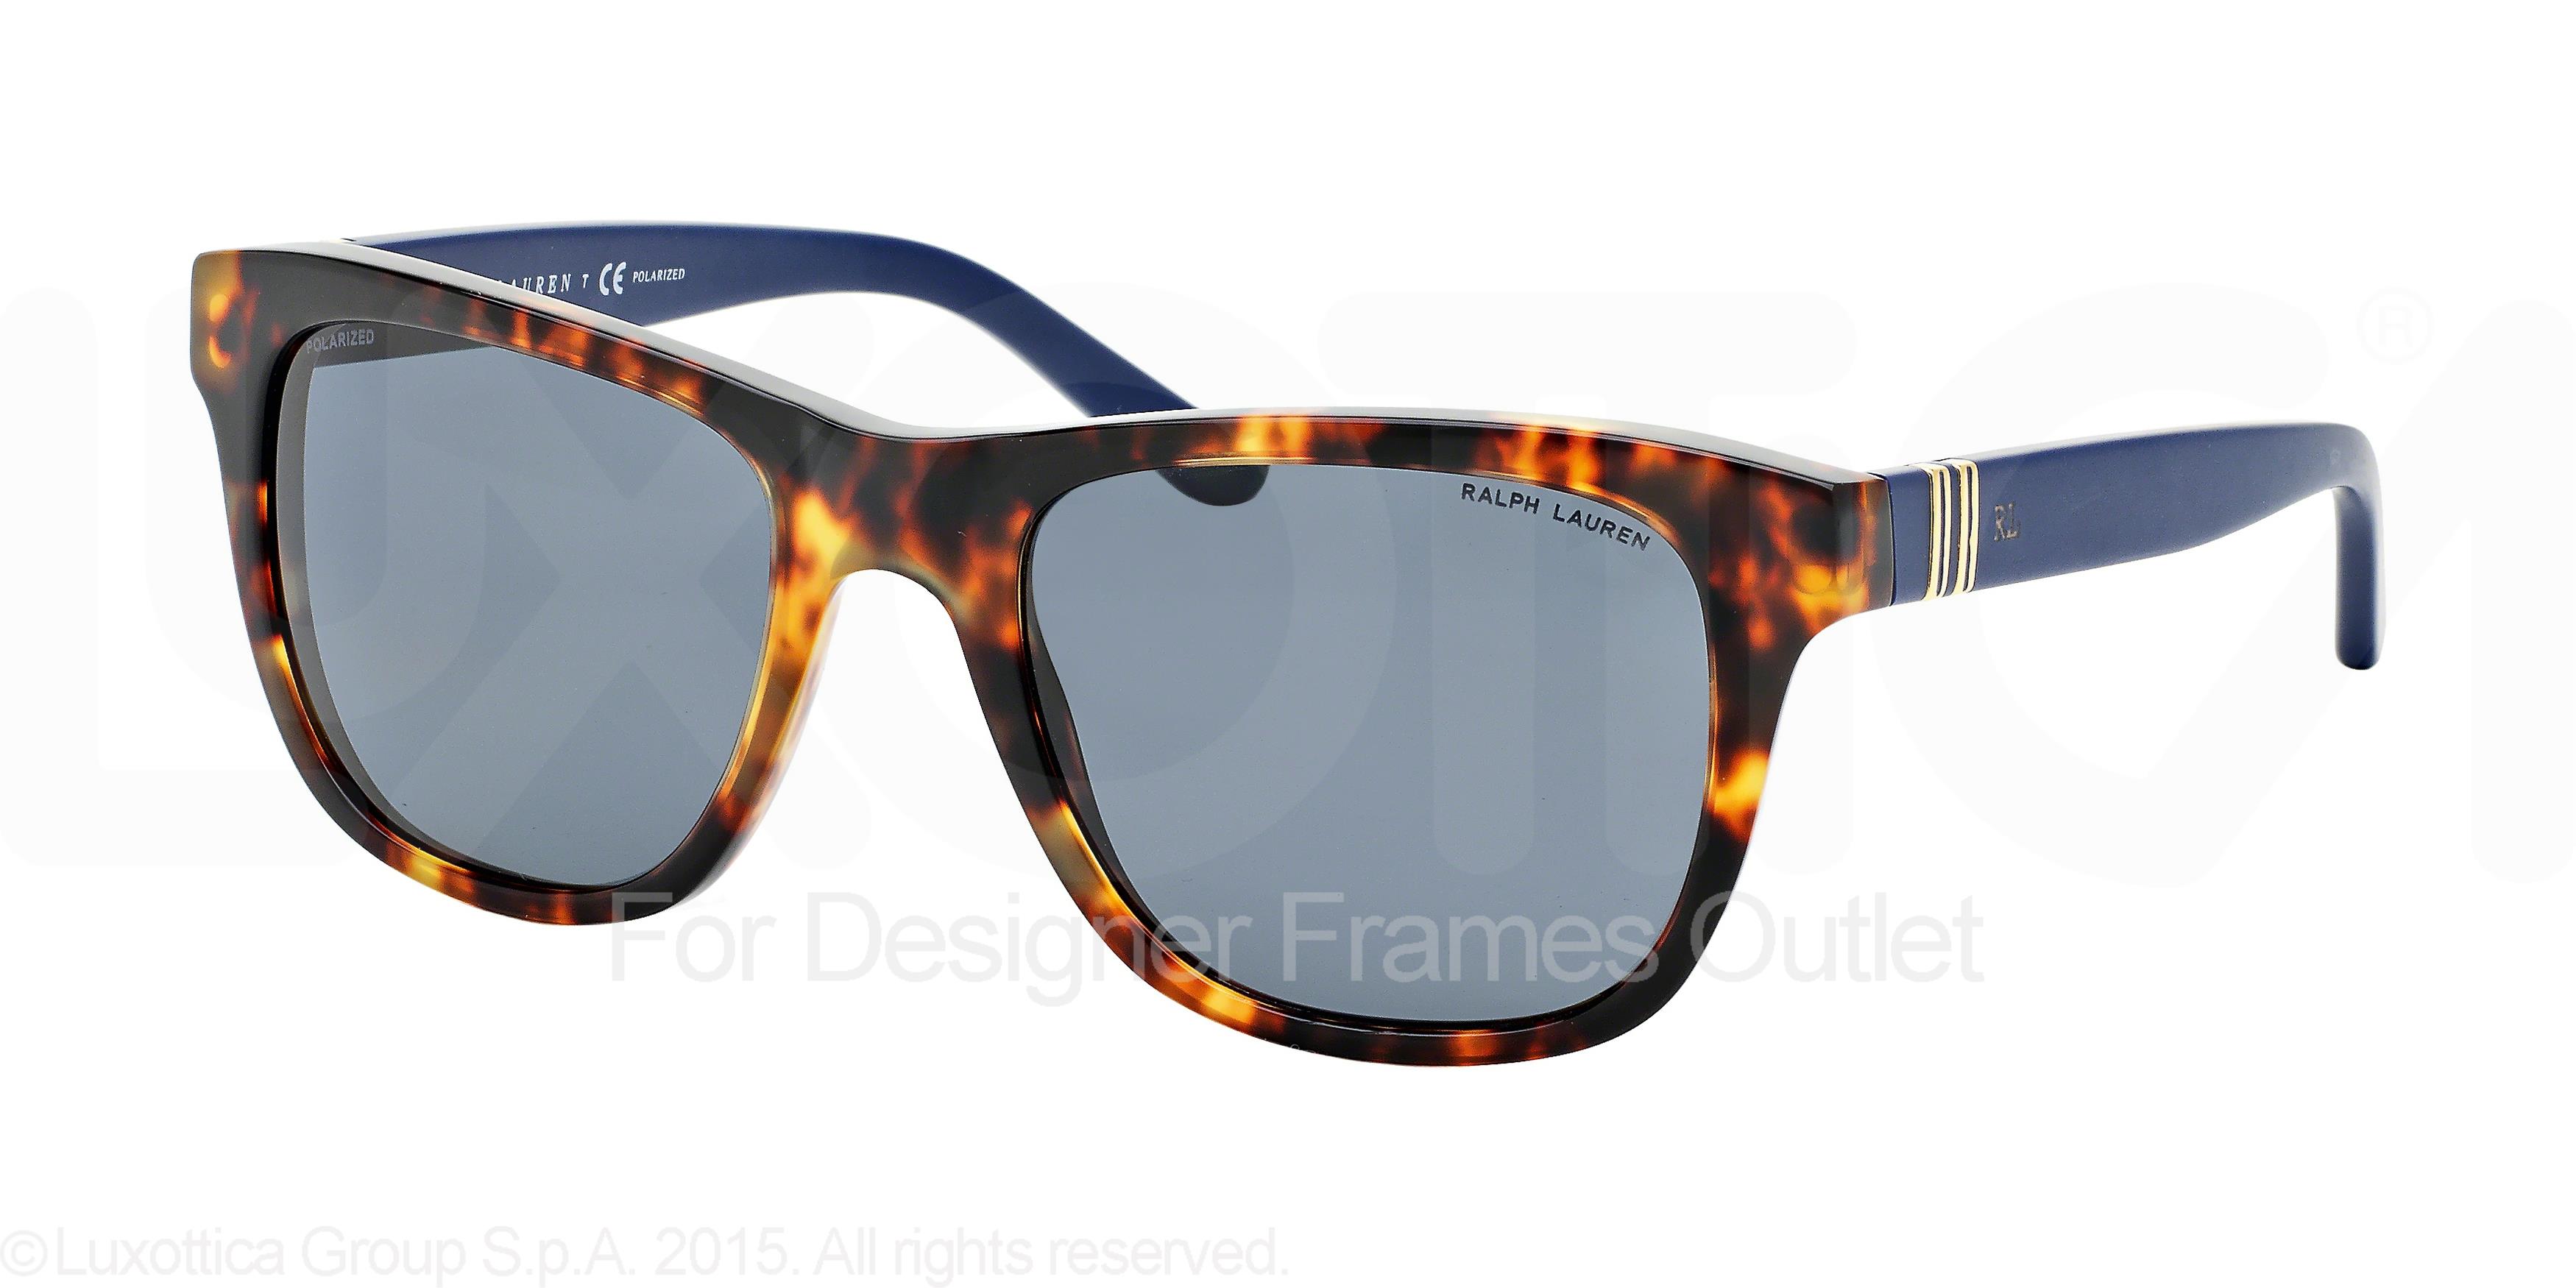 Picture of Ralph Lauren Sunglasses PH4090